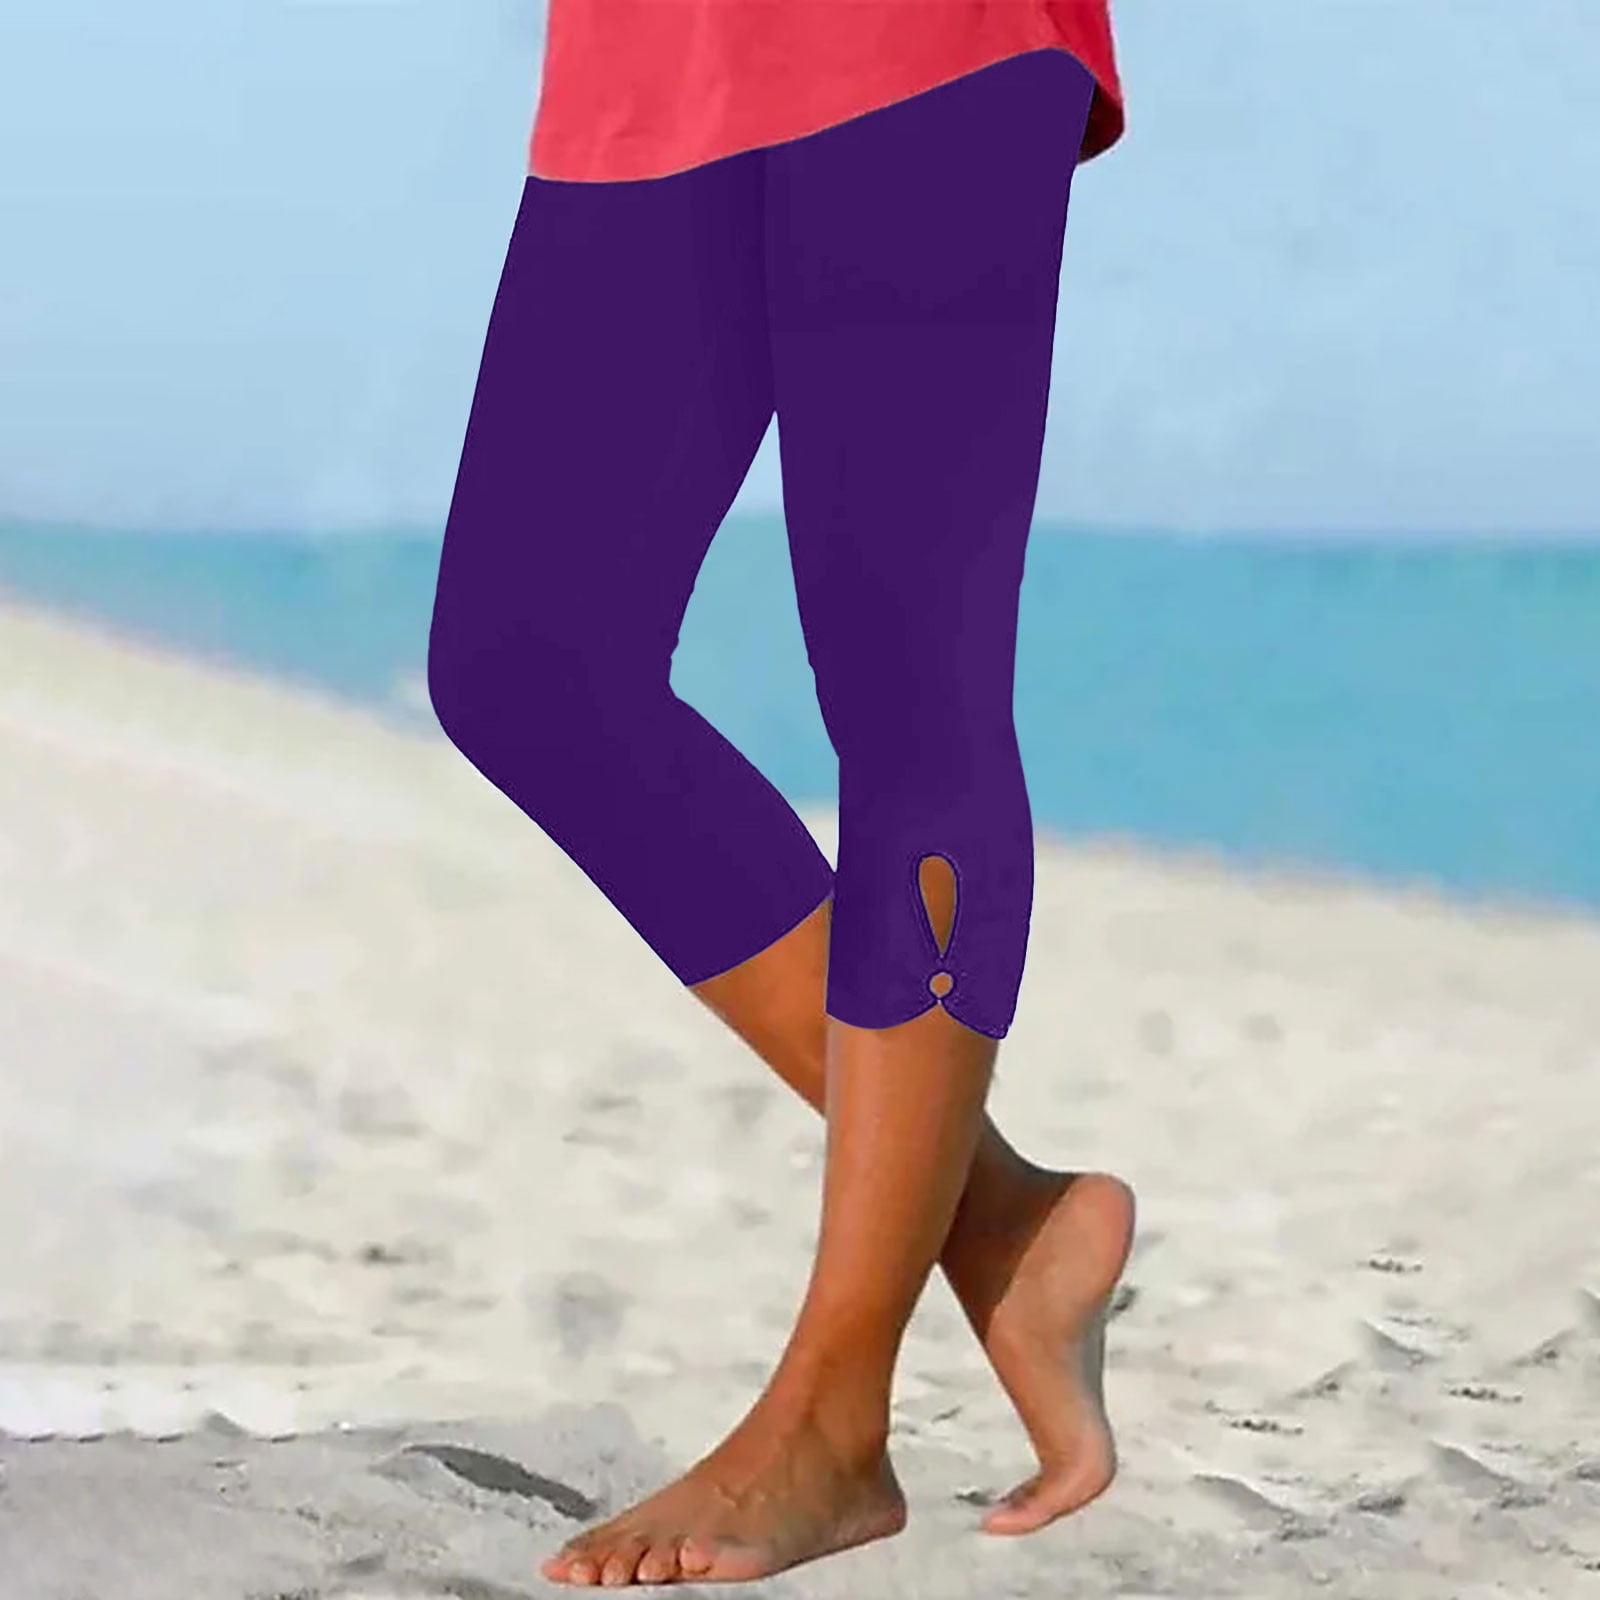 Jsaierl Capris for Women Casual Summer Fashion Lightweight Stretch Skimmer  Pants Drawstring Capri Pant Plus Size Activewear 